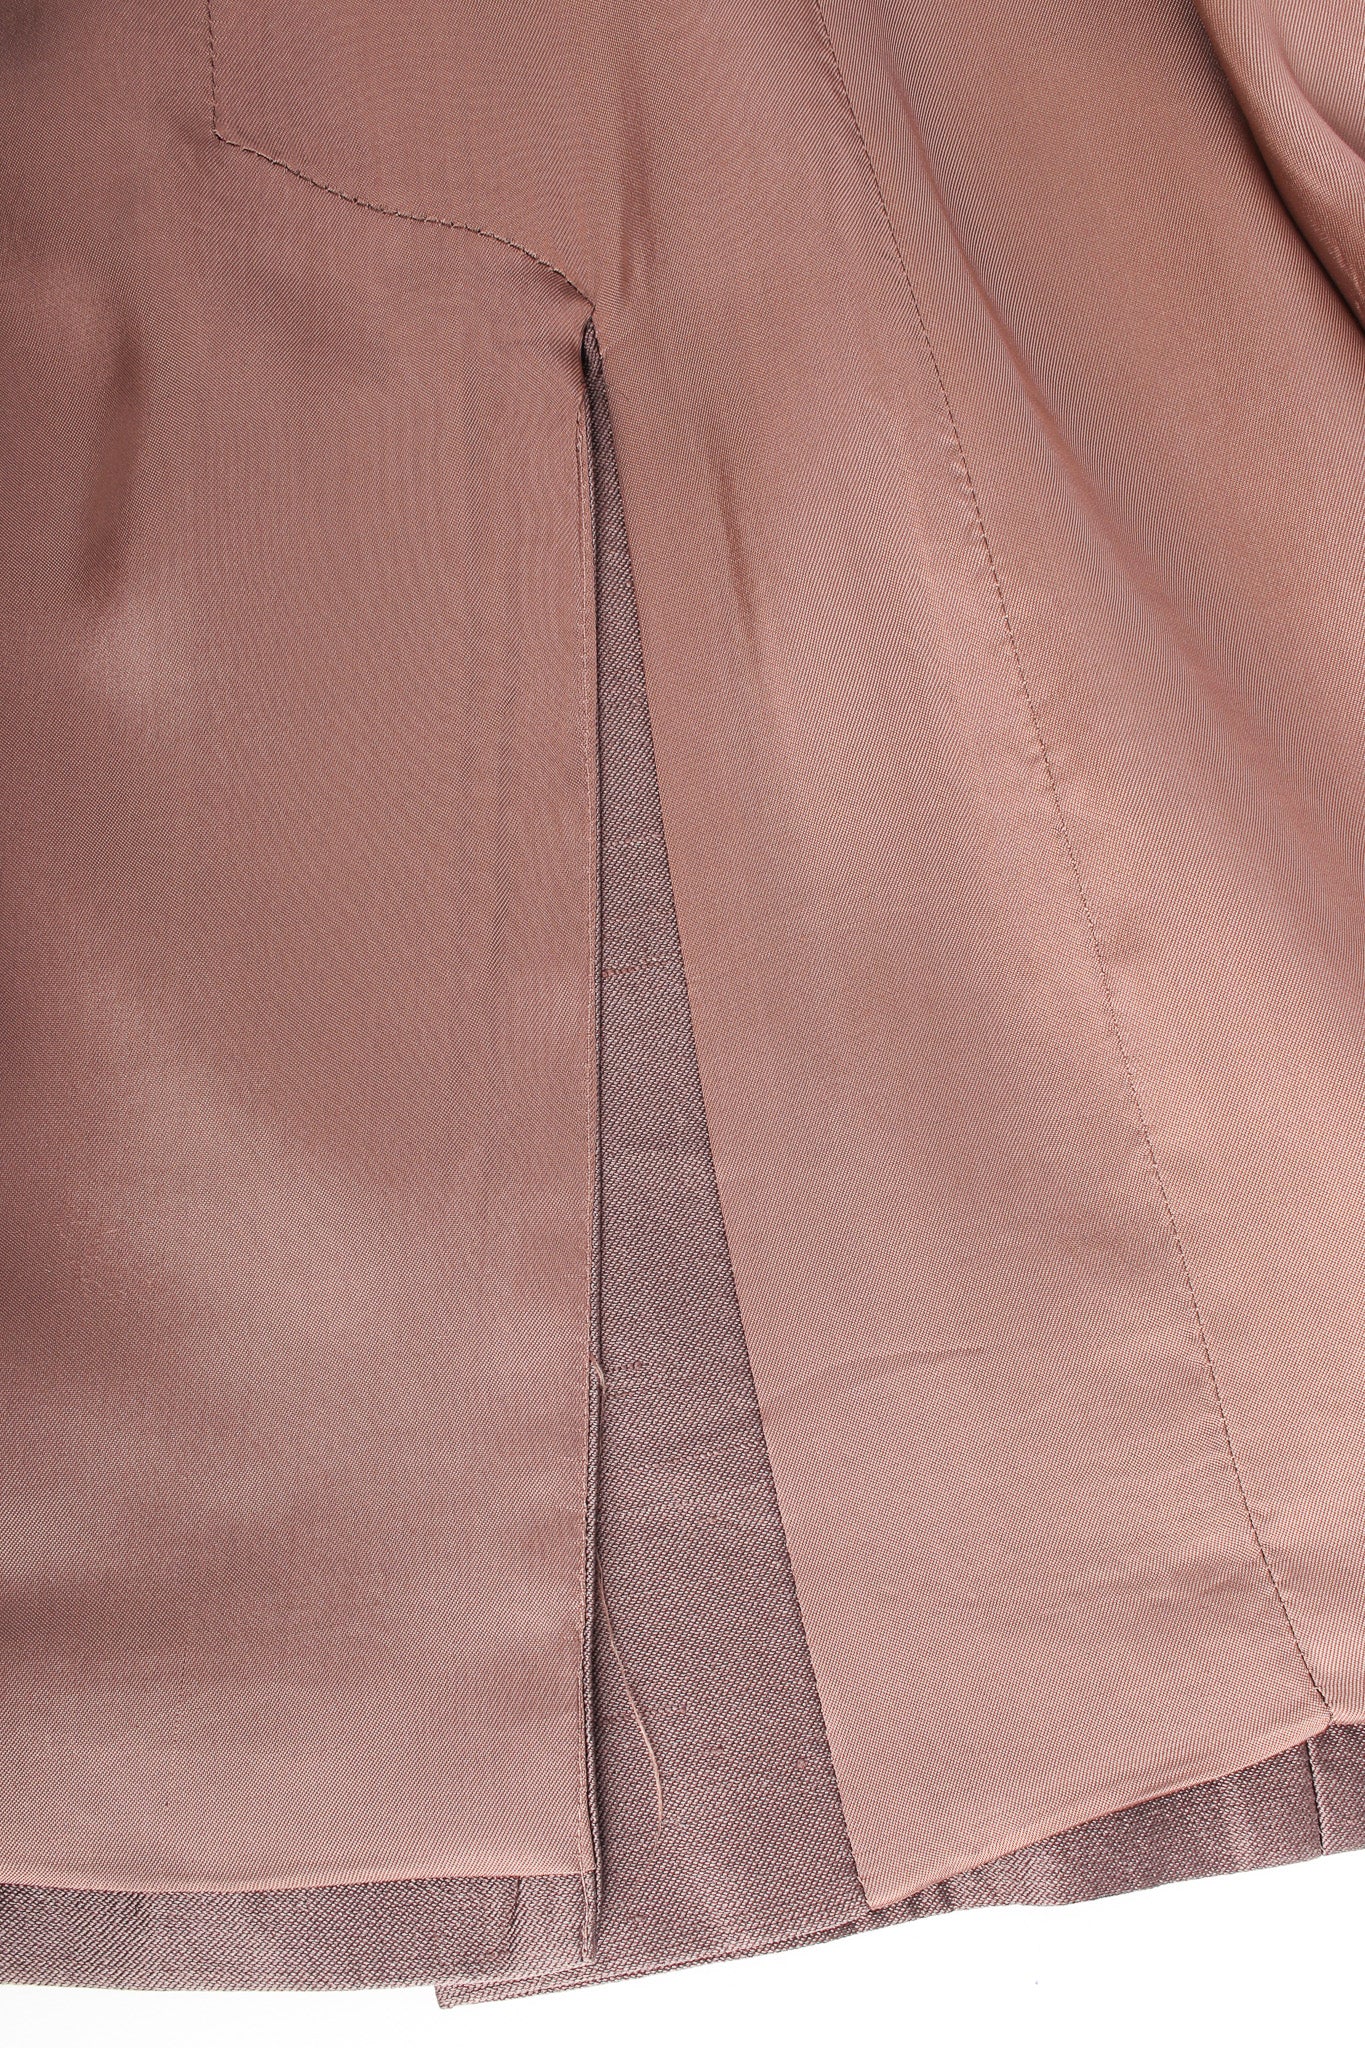 Vintage Dries Van Noten Floral Silk Jacket, Vest, & Skirt Set back jacket vent  @ Recess LA